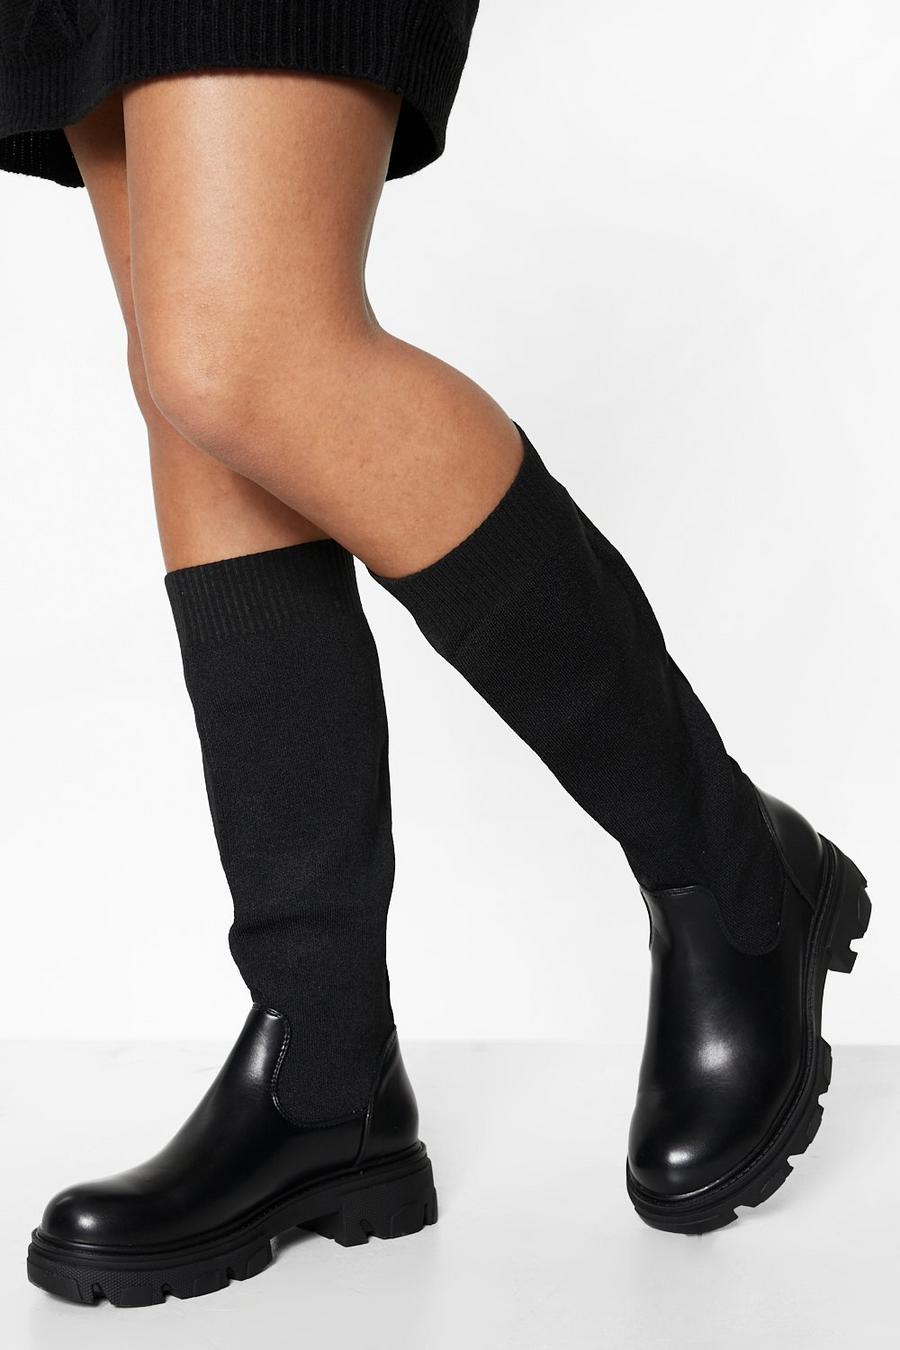 Black schwarz Knitted Upper Knee High Boot